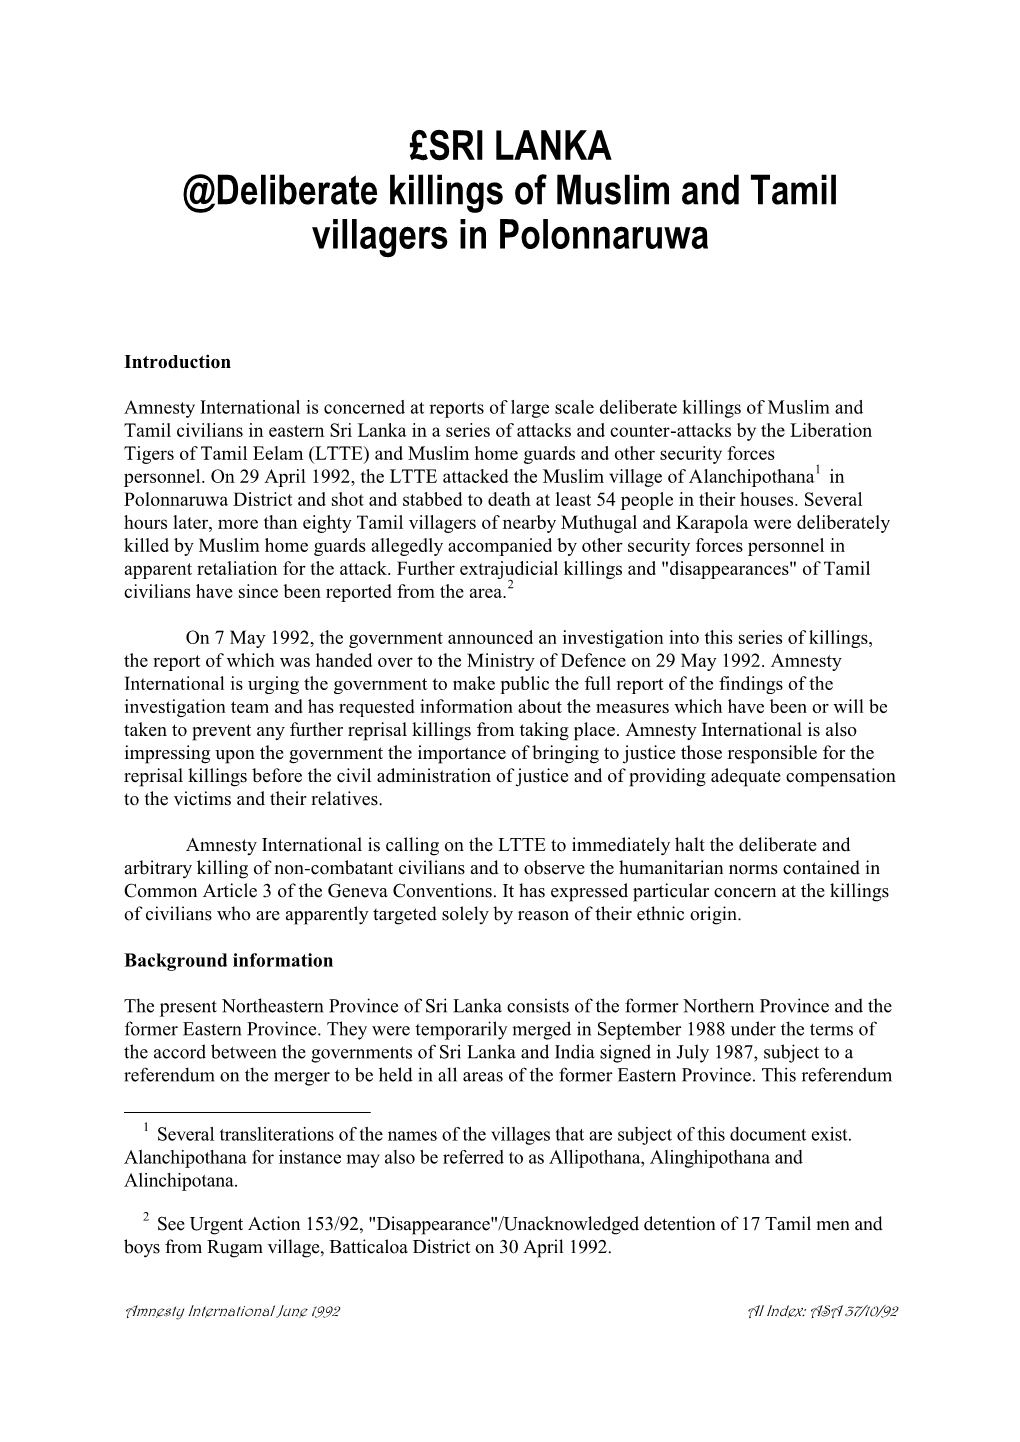 £SRI LANKA @Deliberate Killings of Muslim and Tamil Villagers in Polonnaruwa